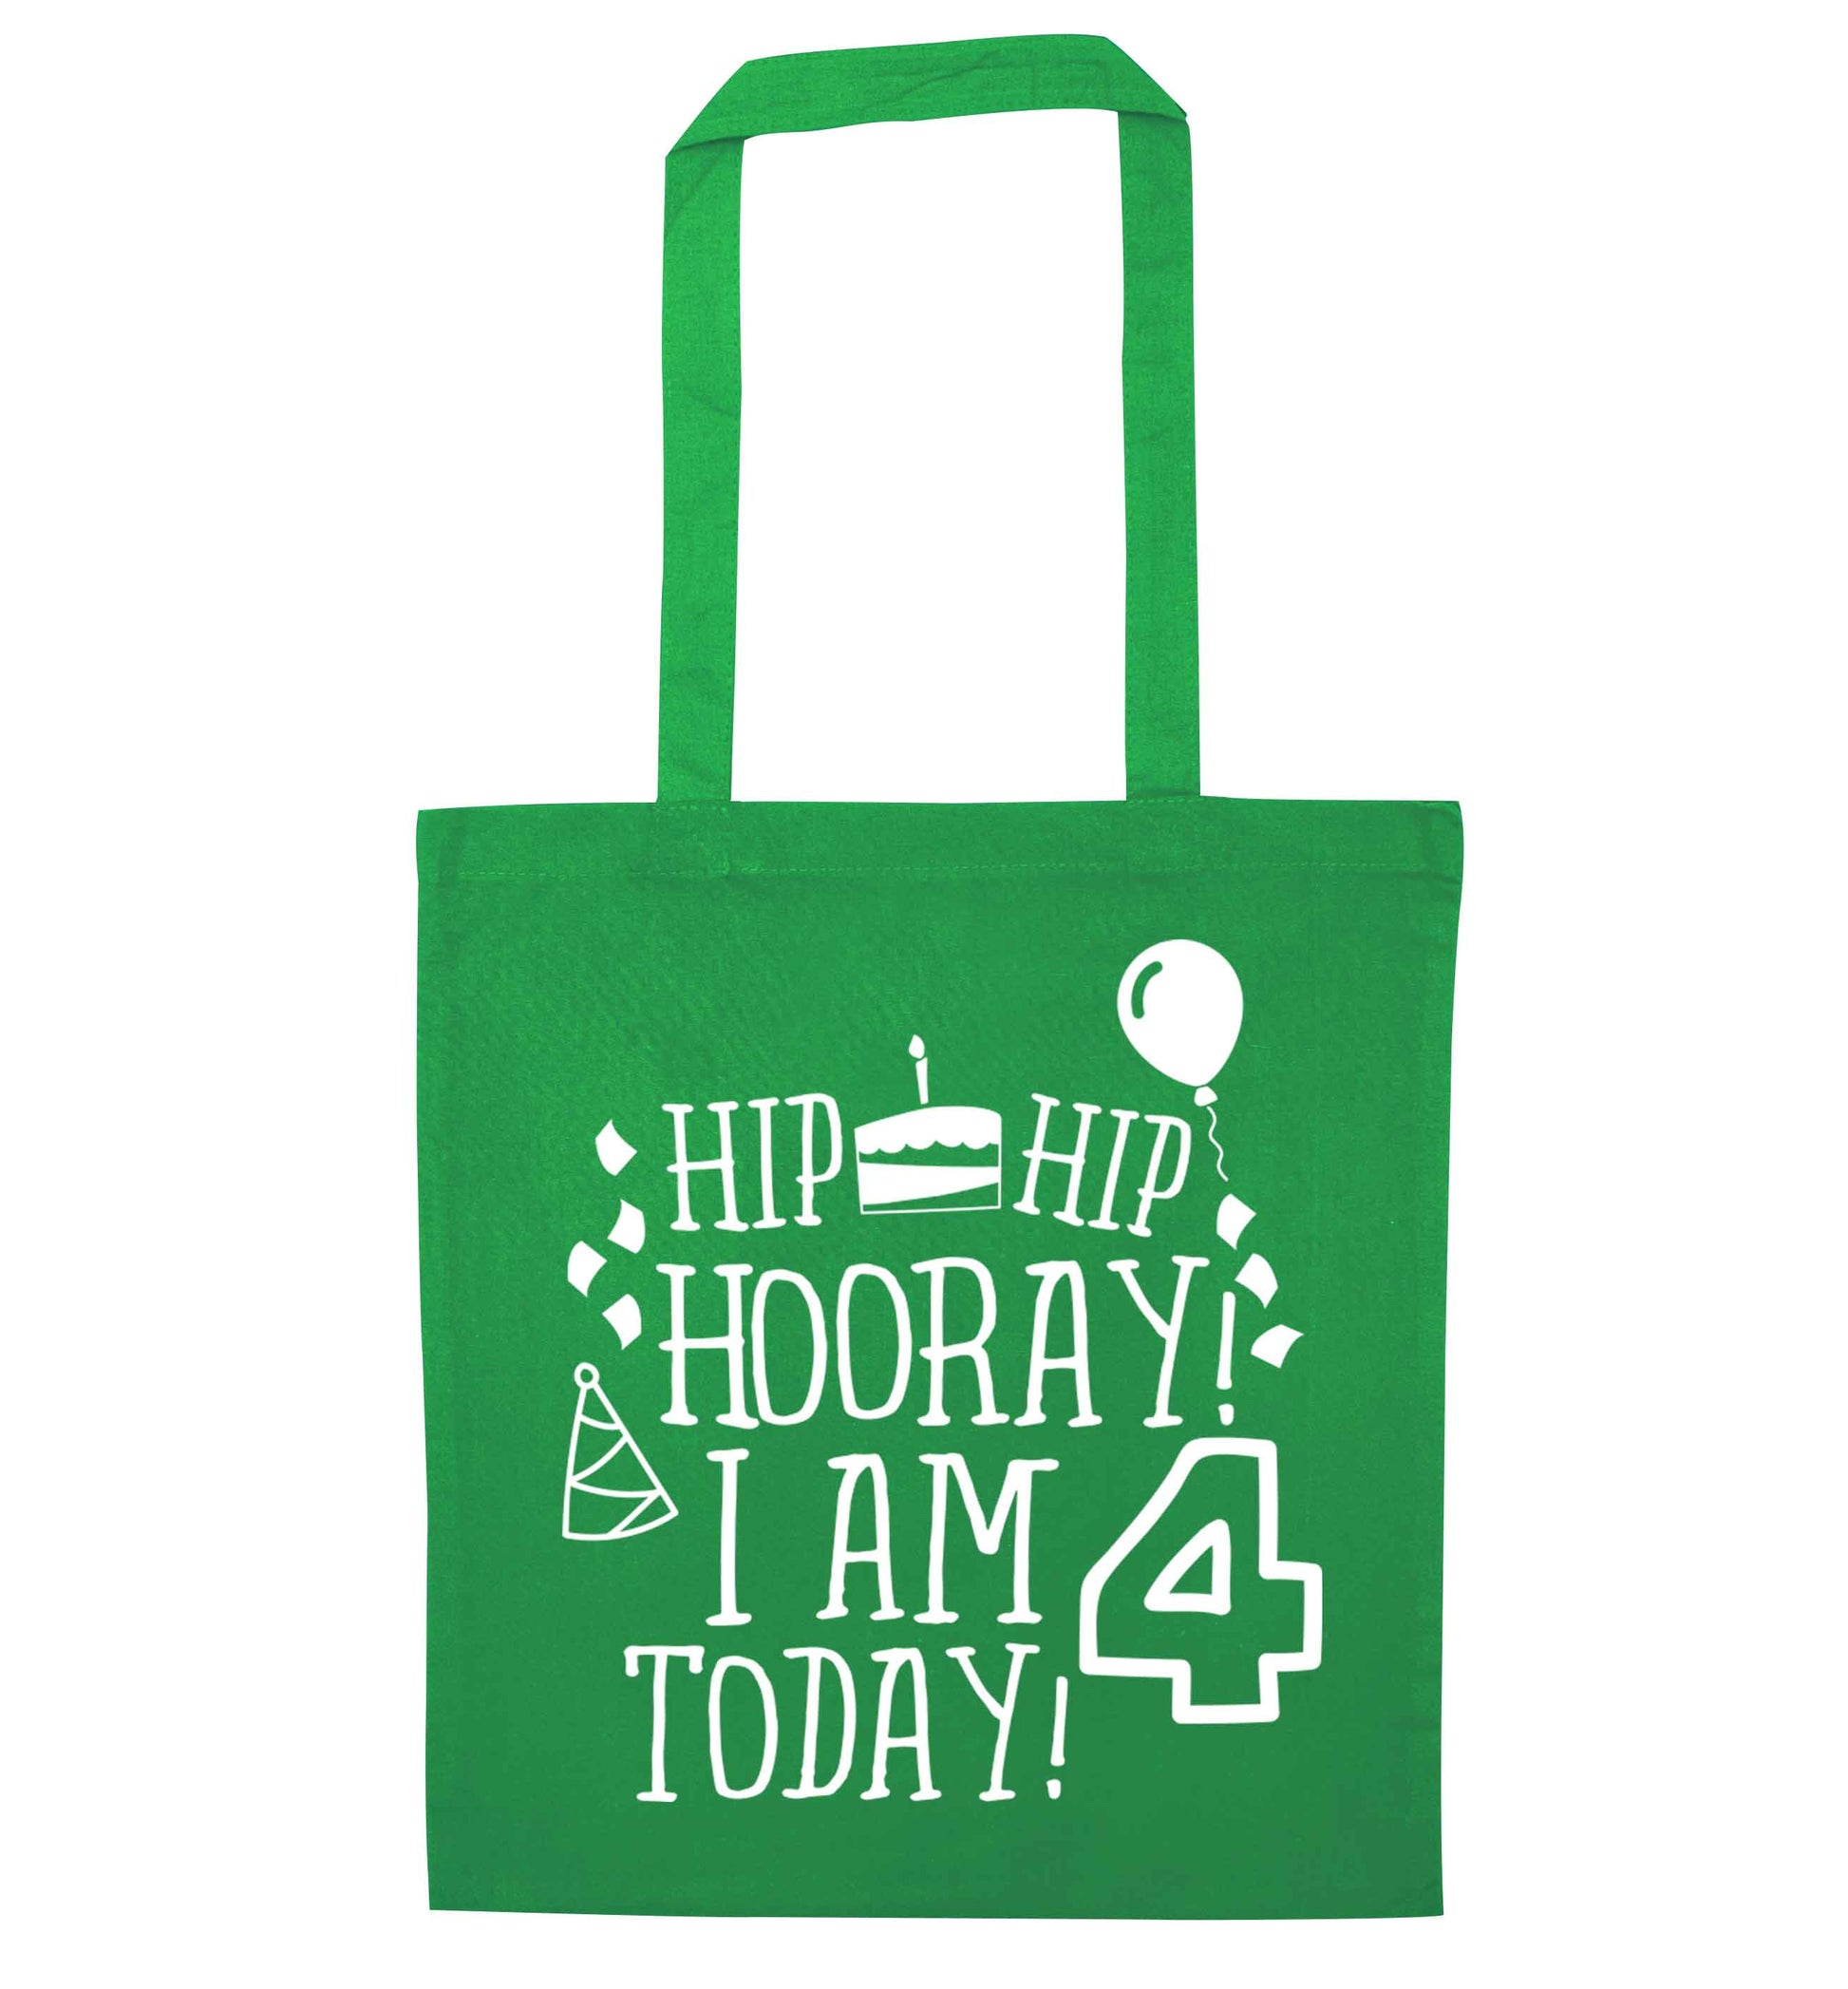 Hip hip hooray I am four today! green tote bag